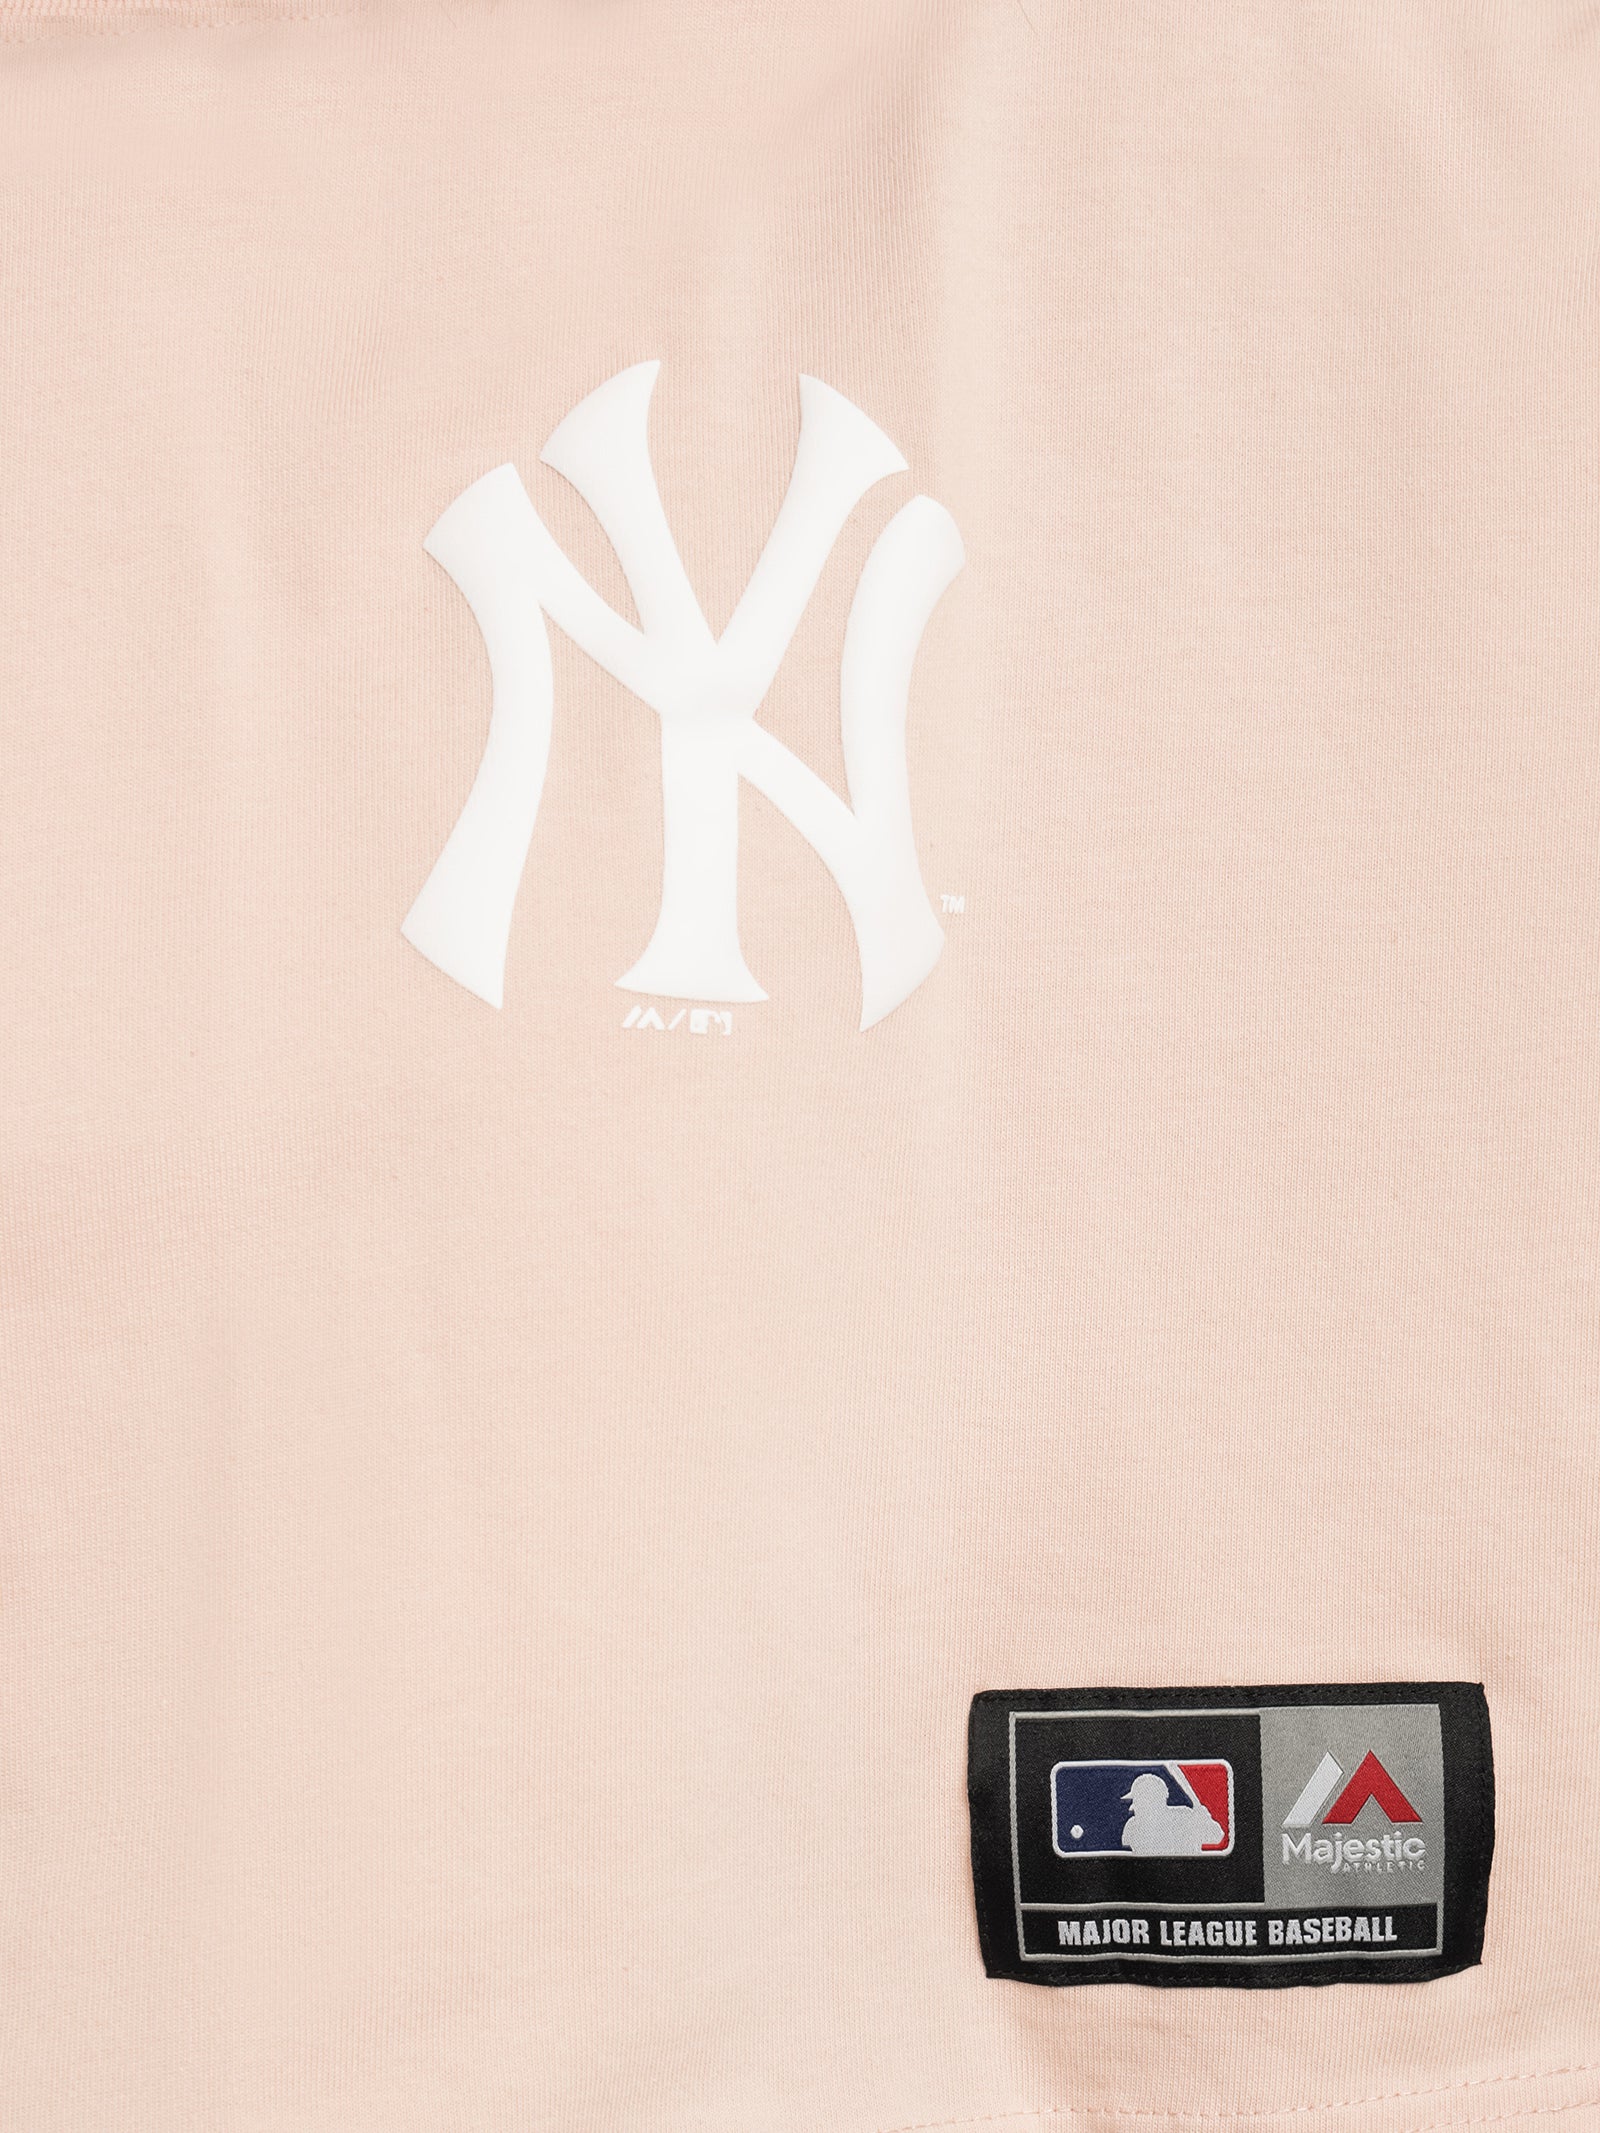 Majestic - New York Yankees Rando LS Tee in Black